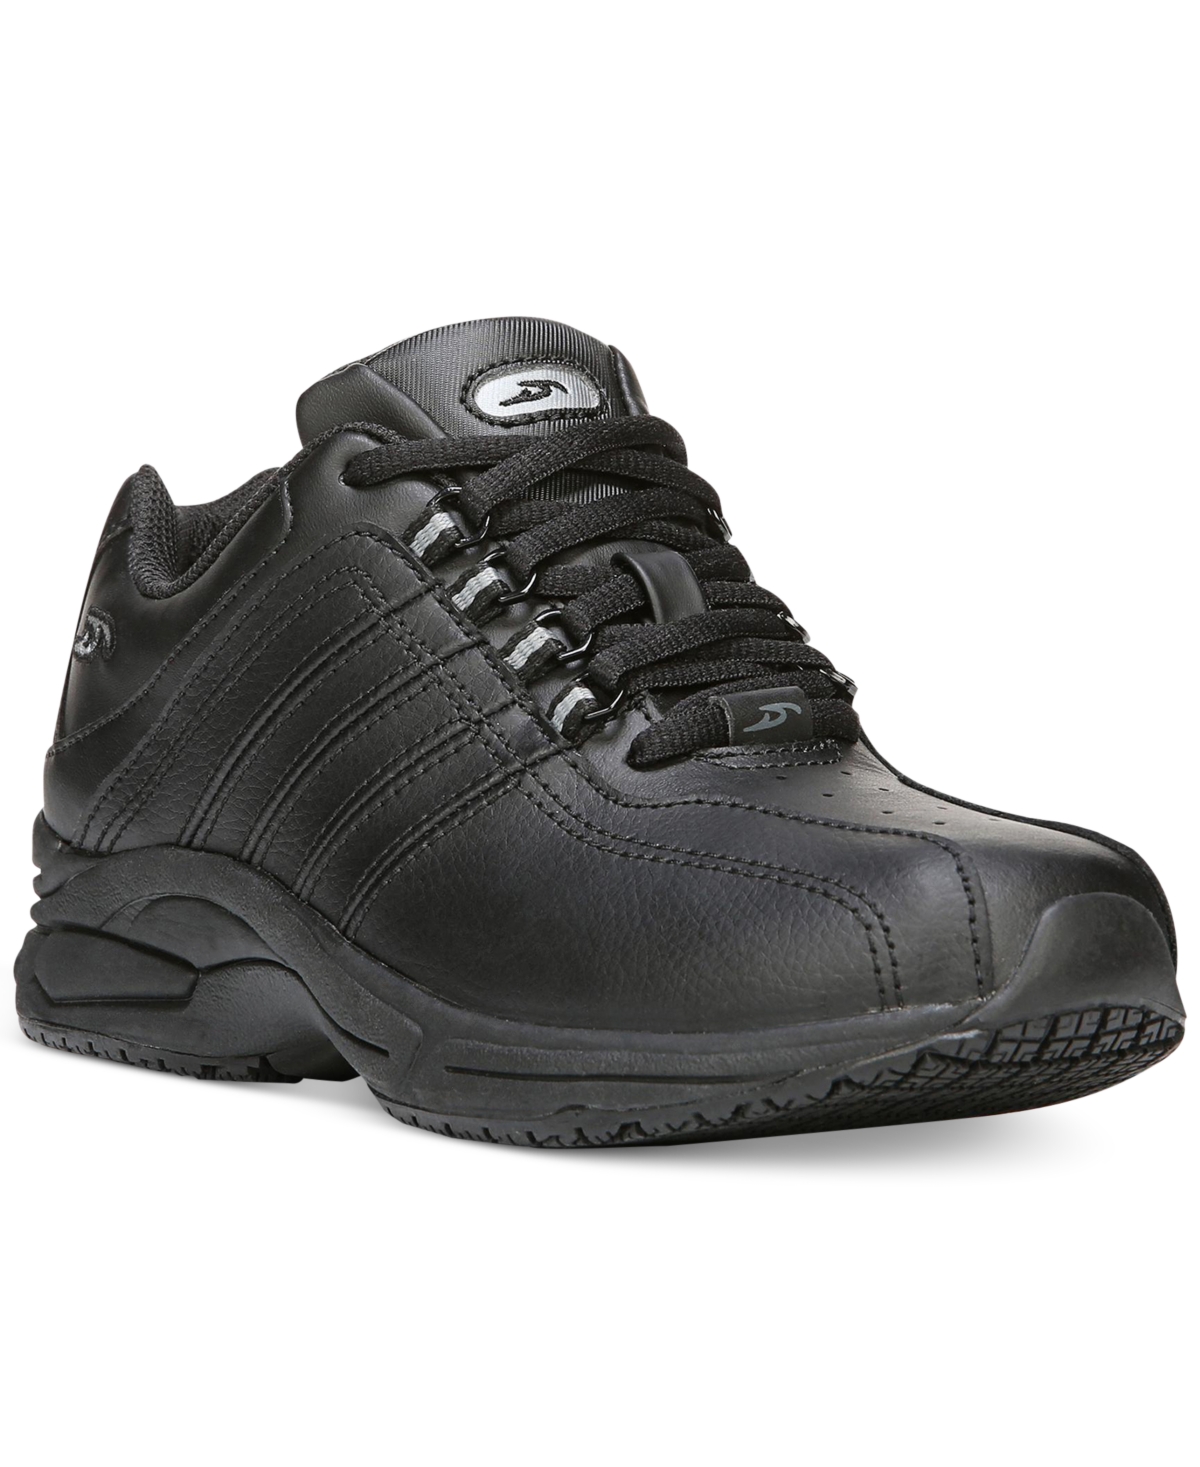 Women's Kimberly Ii Slip-Resistant Work Sneakers - Black Leather